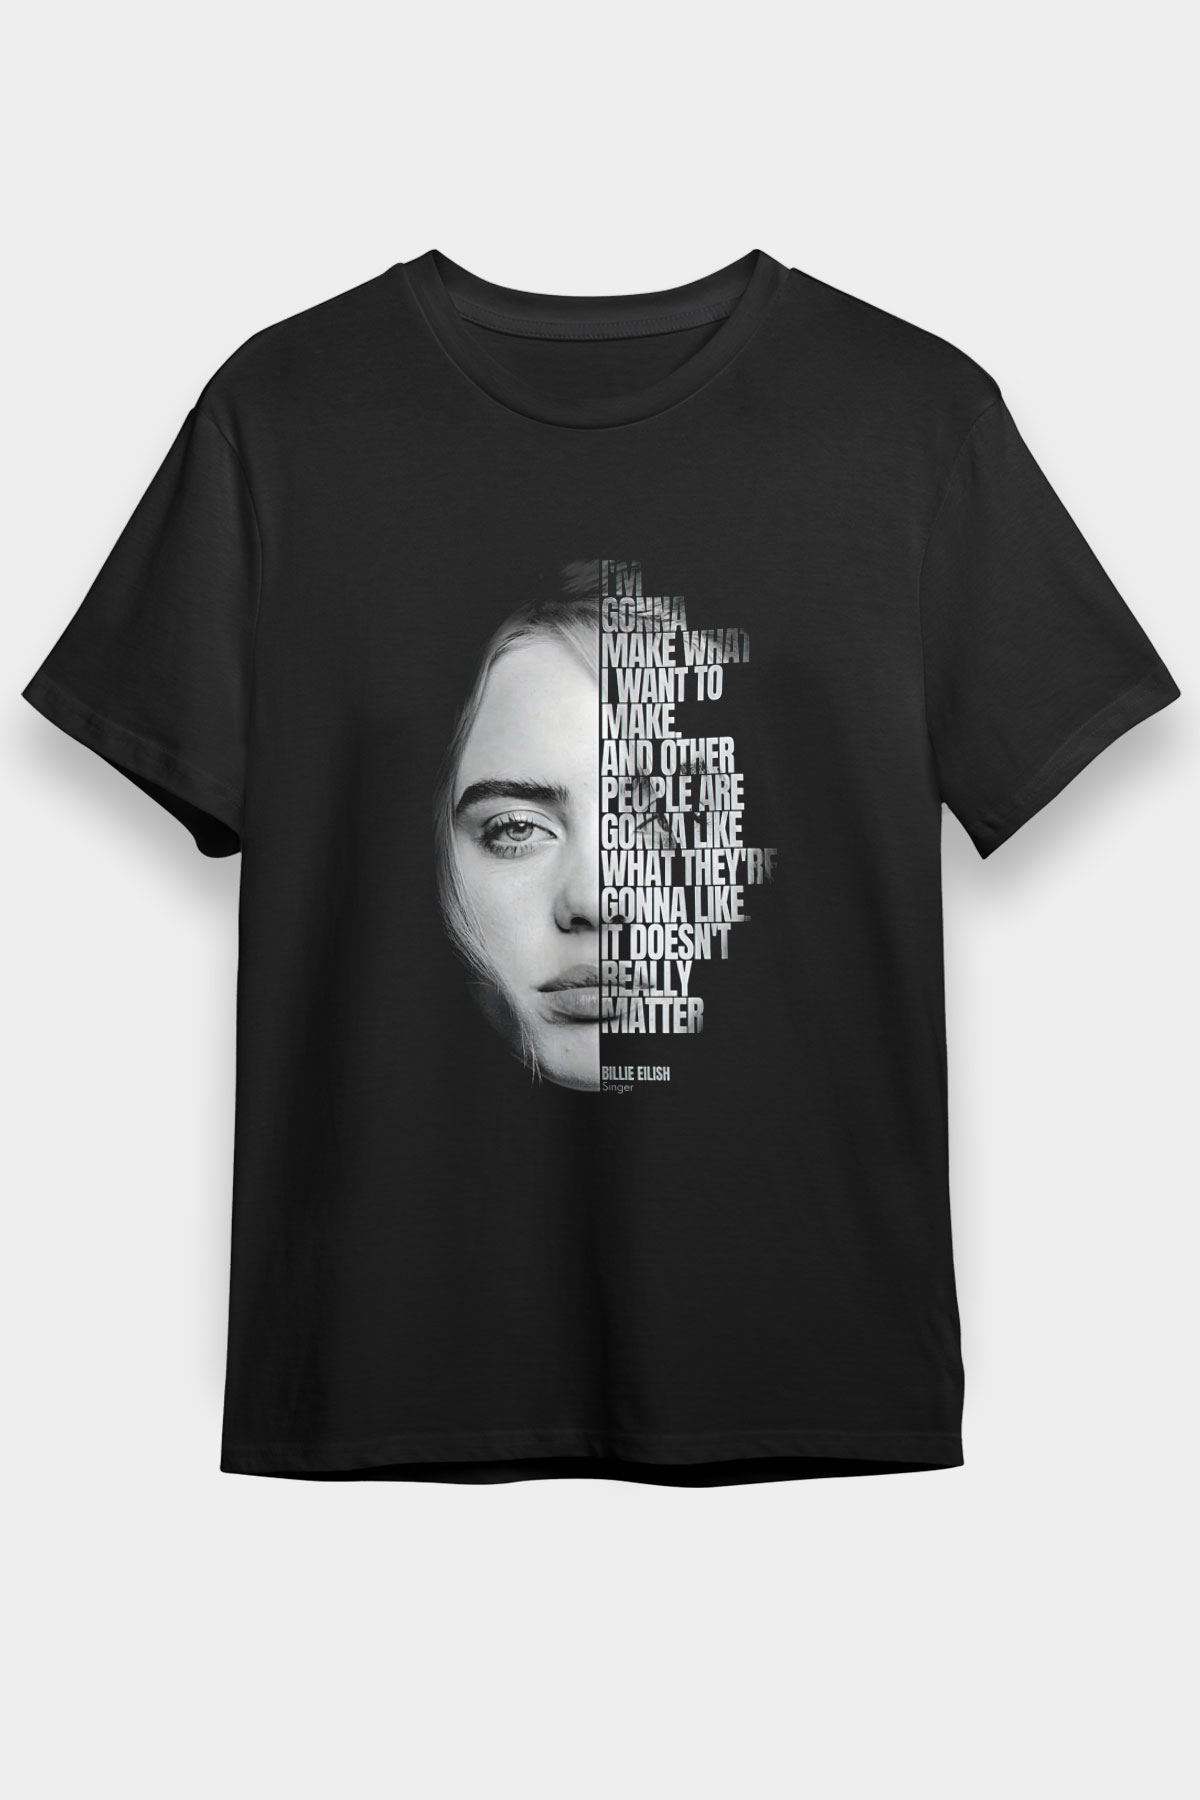 Billie Eilish T shirt,Music Tshirt 06/